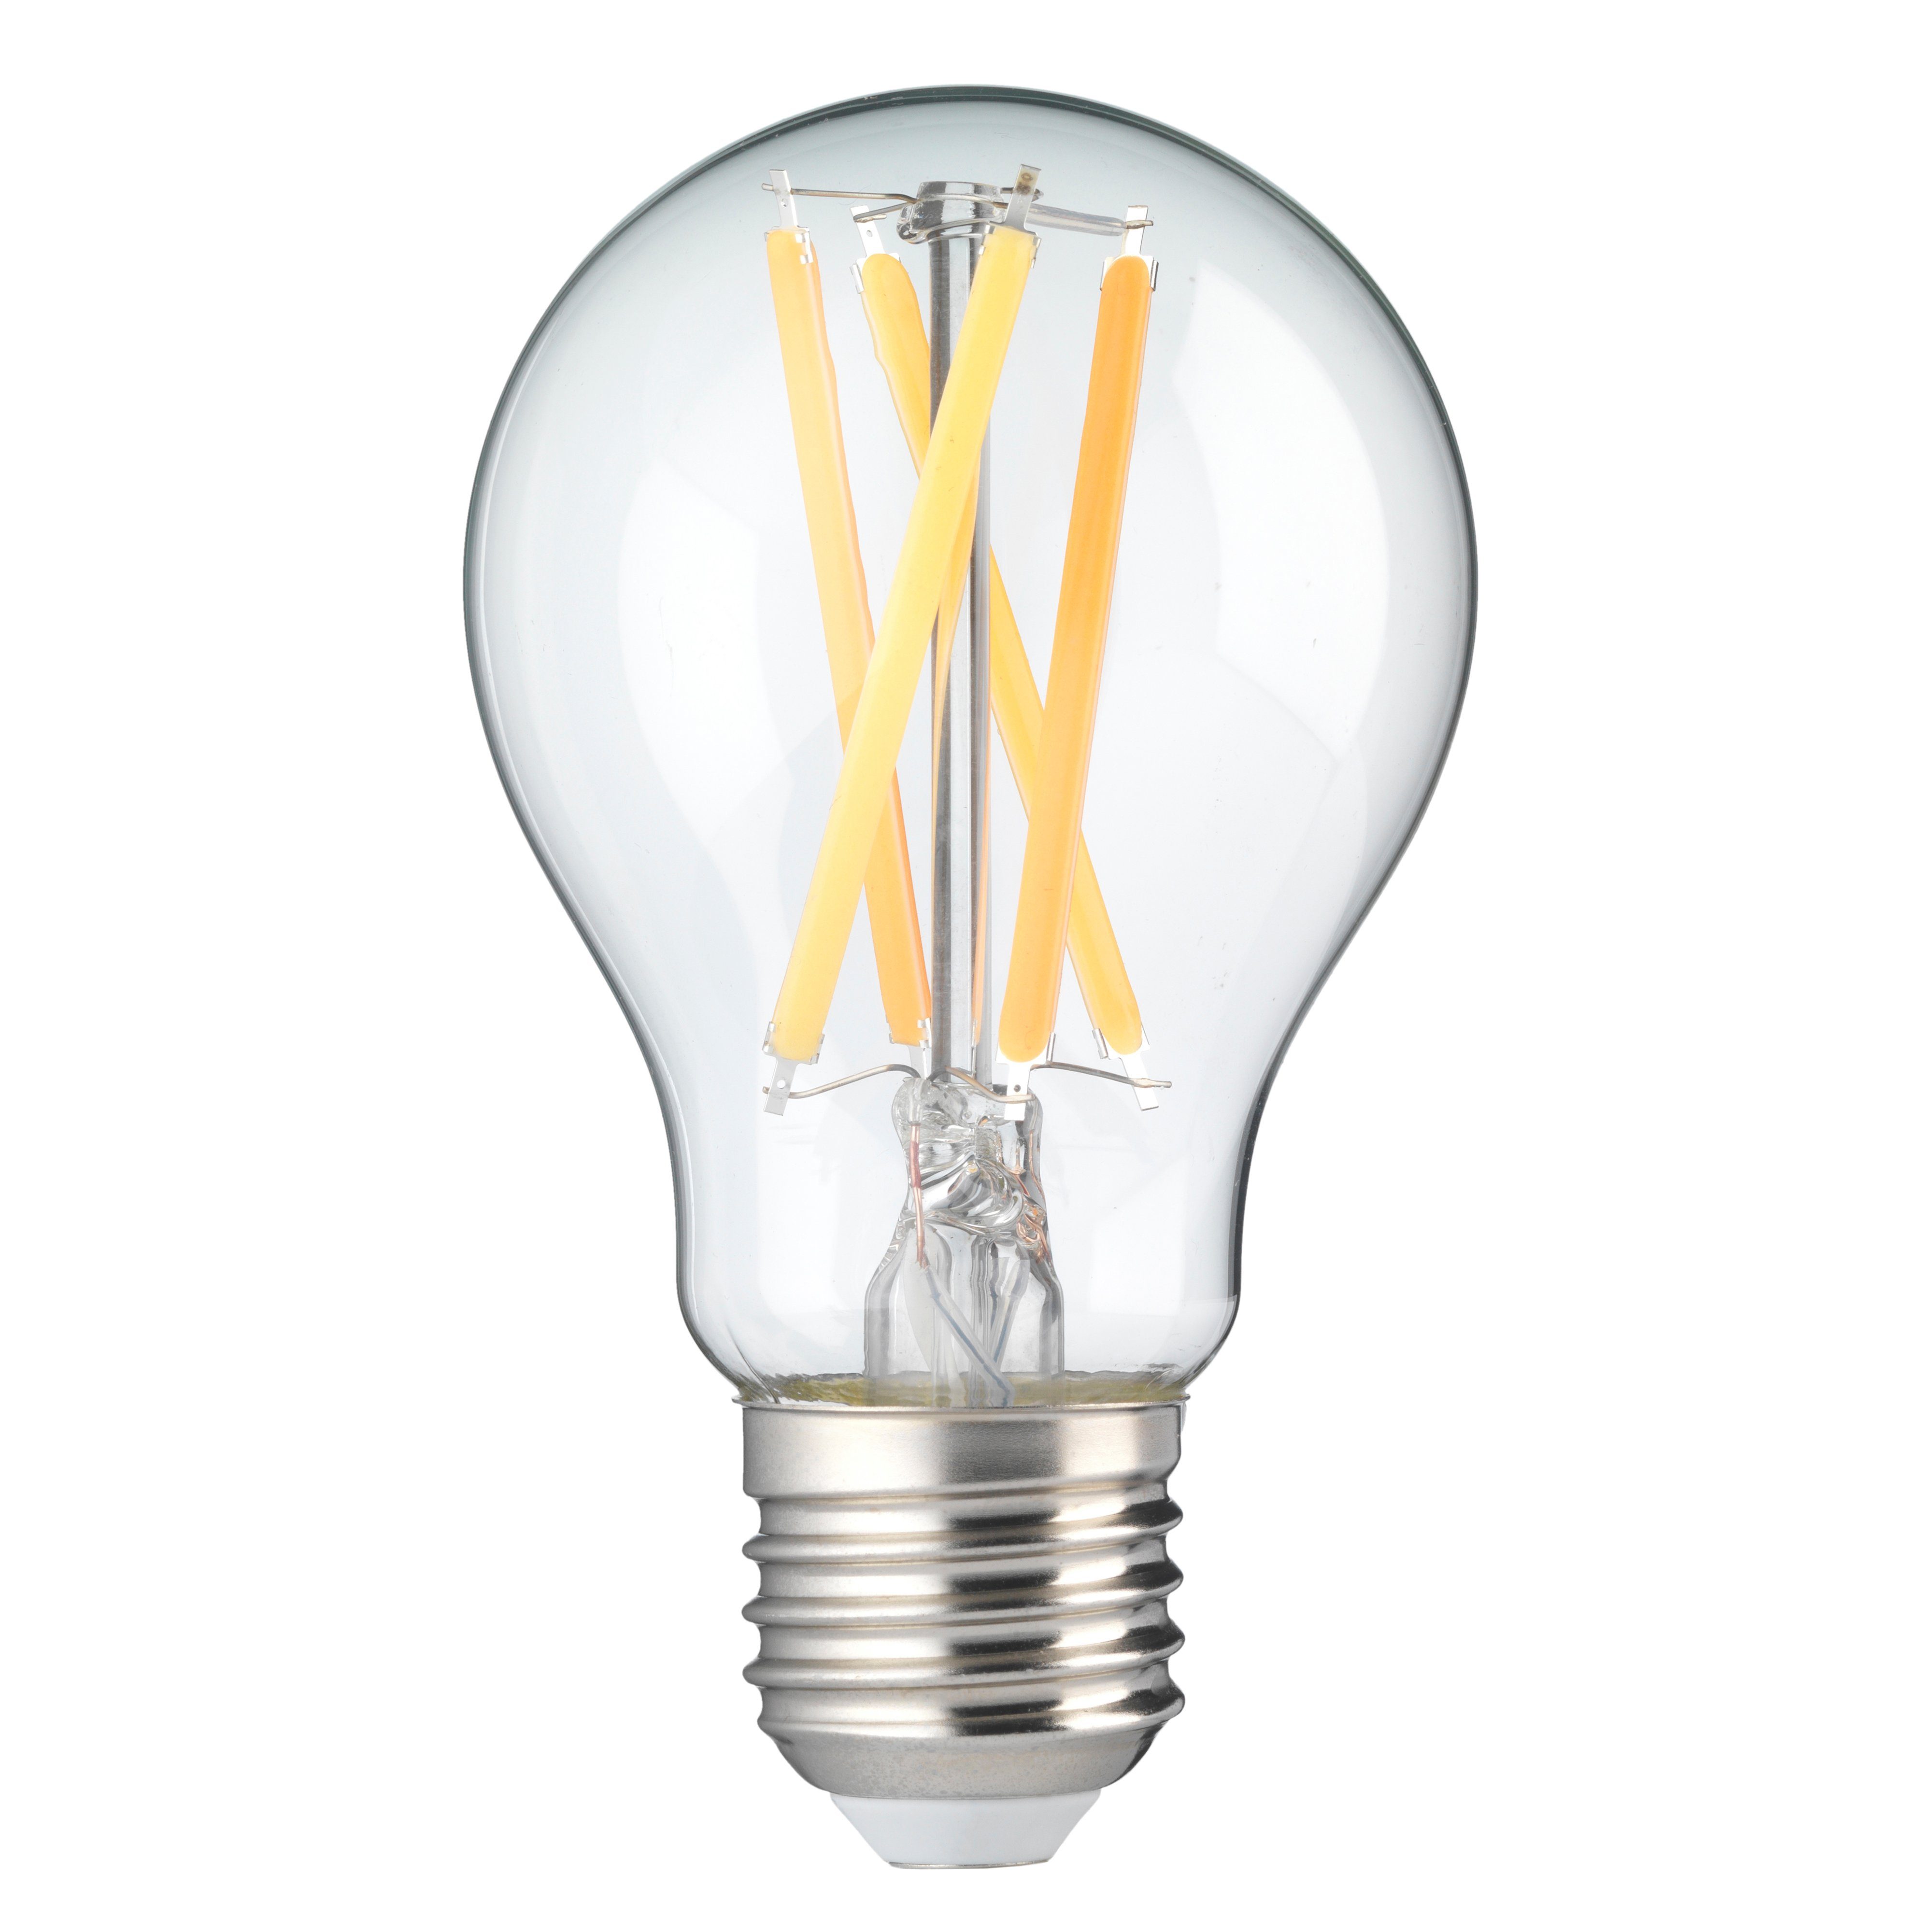 Smarte Lampe SMARTLIGHT110 Alecto